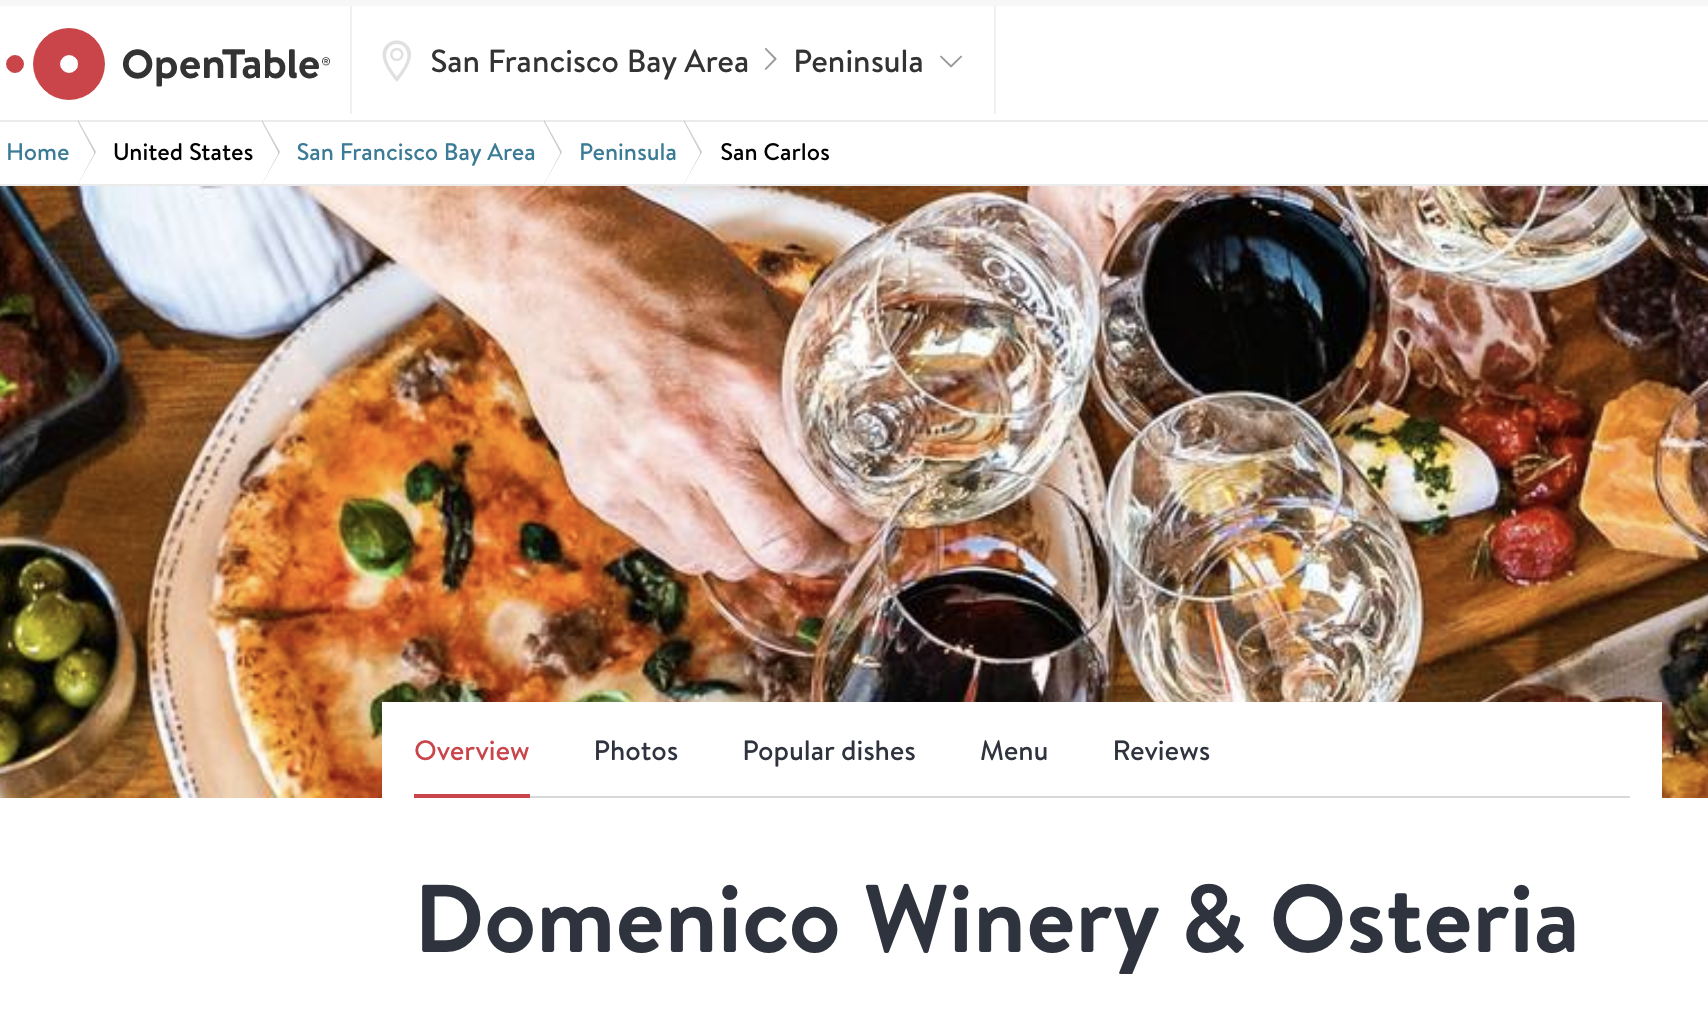 Domenico Winery & Osteria on OpenTable